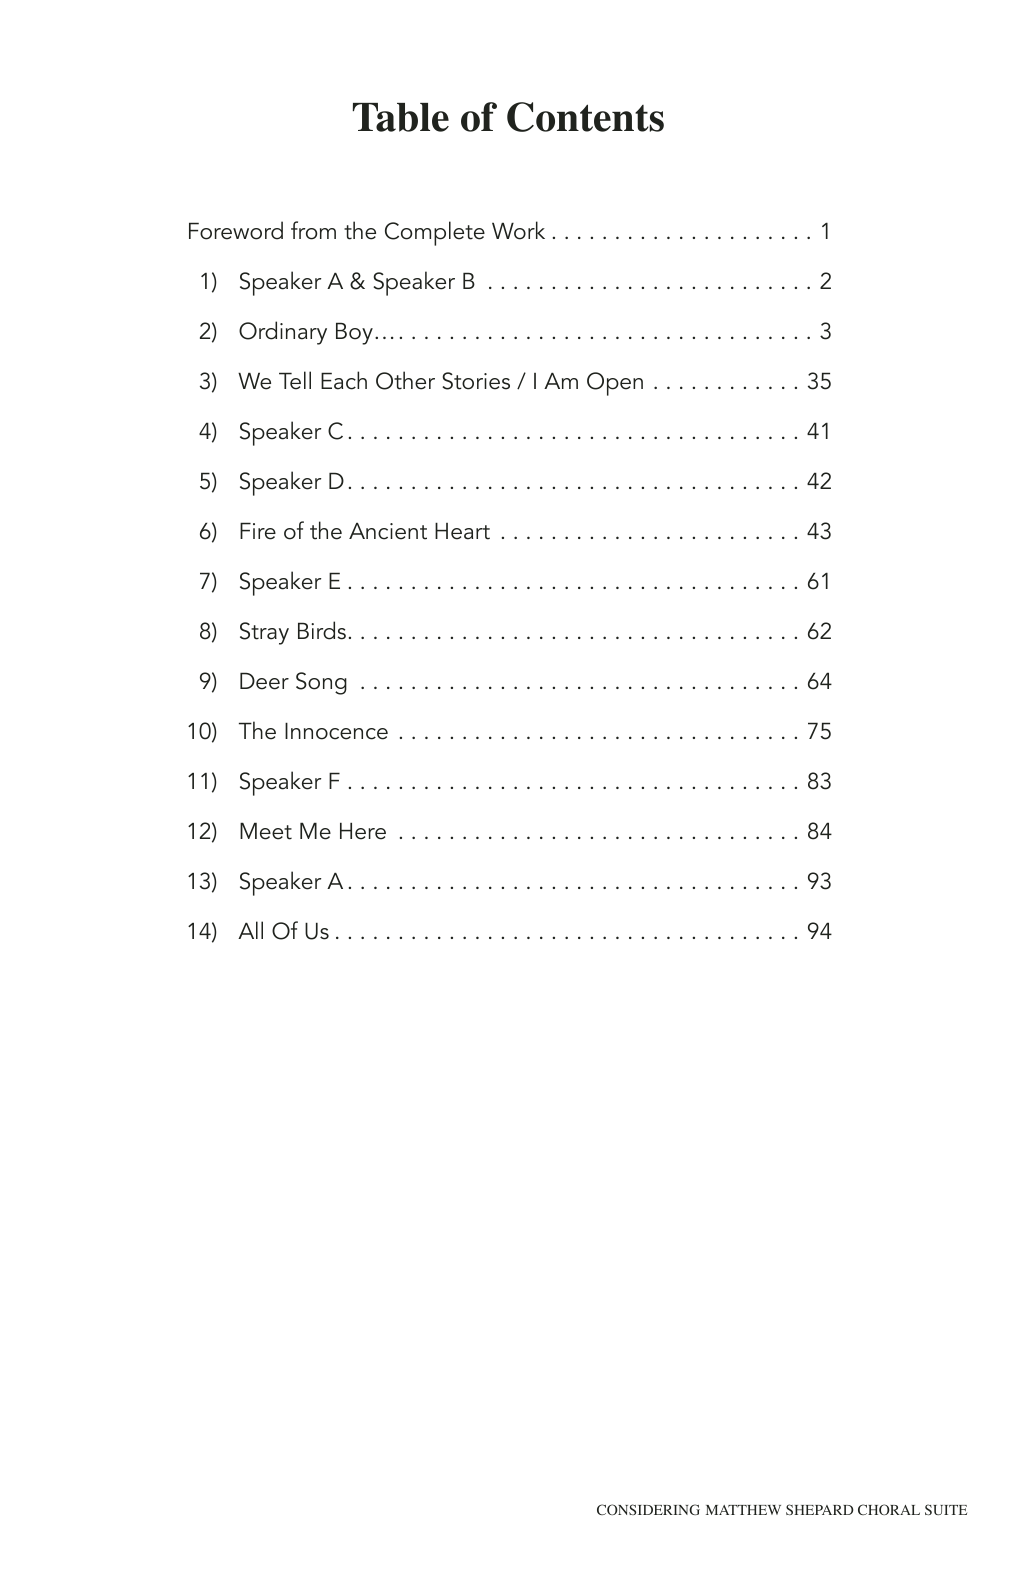 Craig Hella Johnson Considering Matthew Shepard: A Choral Suite Sheet Music Notes & Chords for SATB Choir - Download or Print PDF